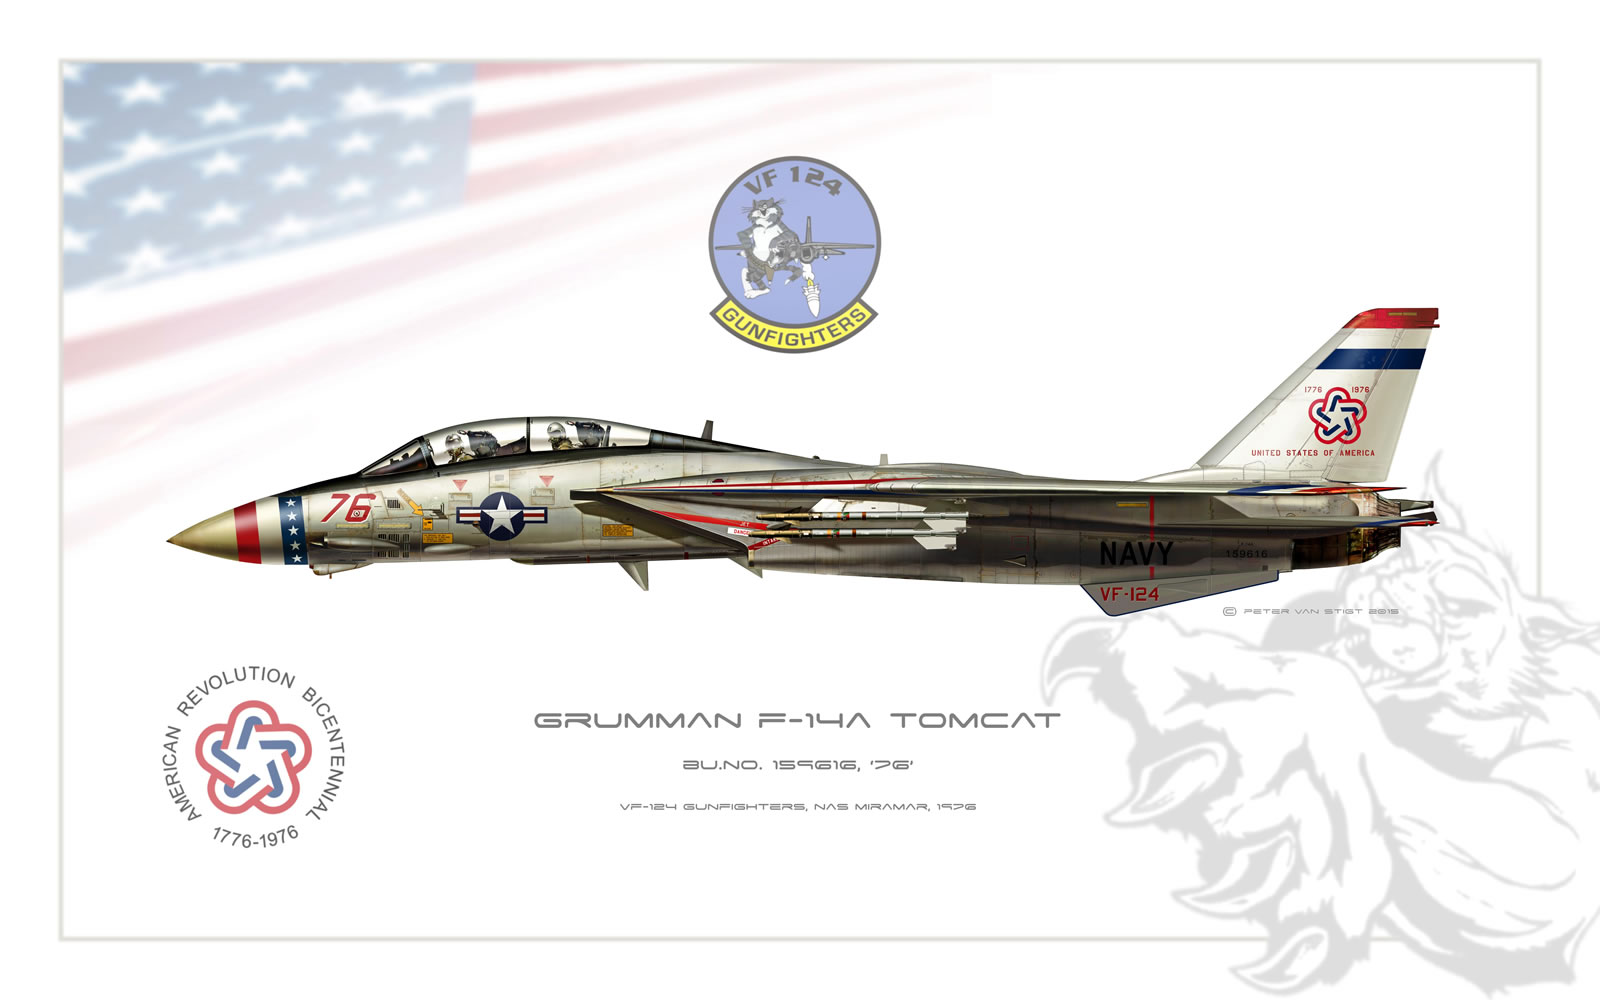 VF-124 Gunfighters Bicentennial F-14 Tomcat Profile